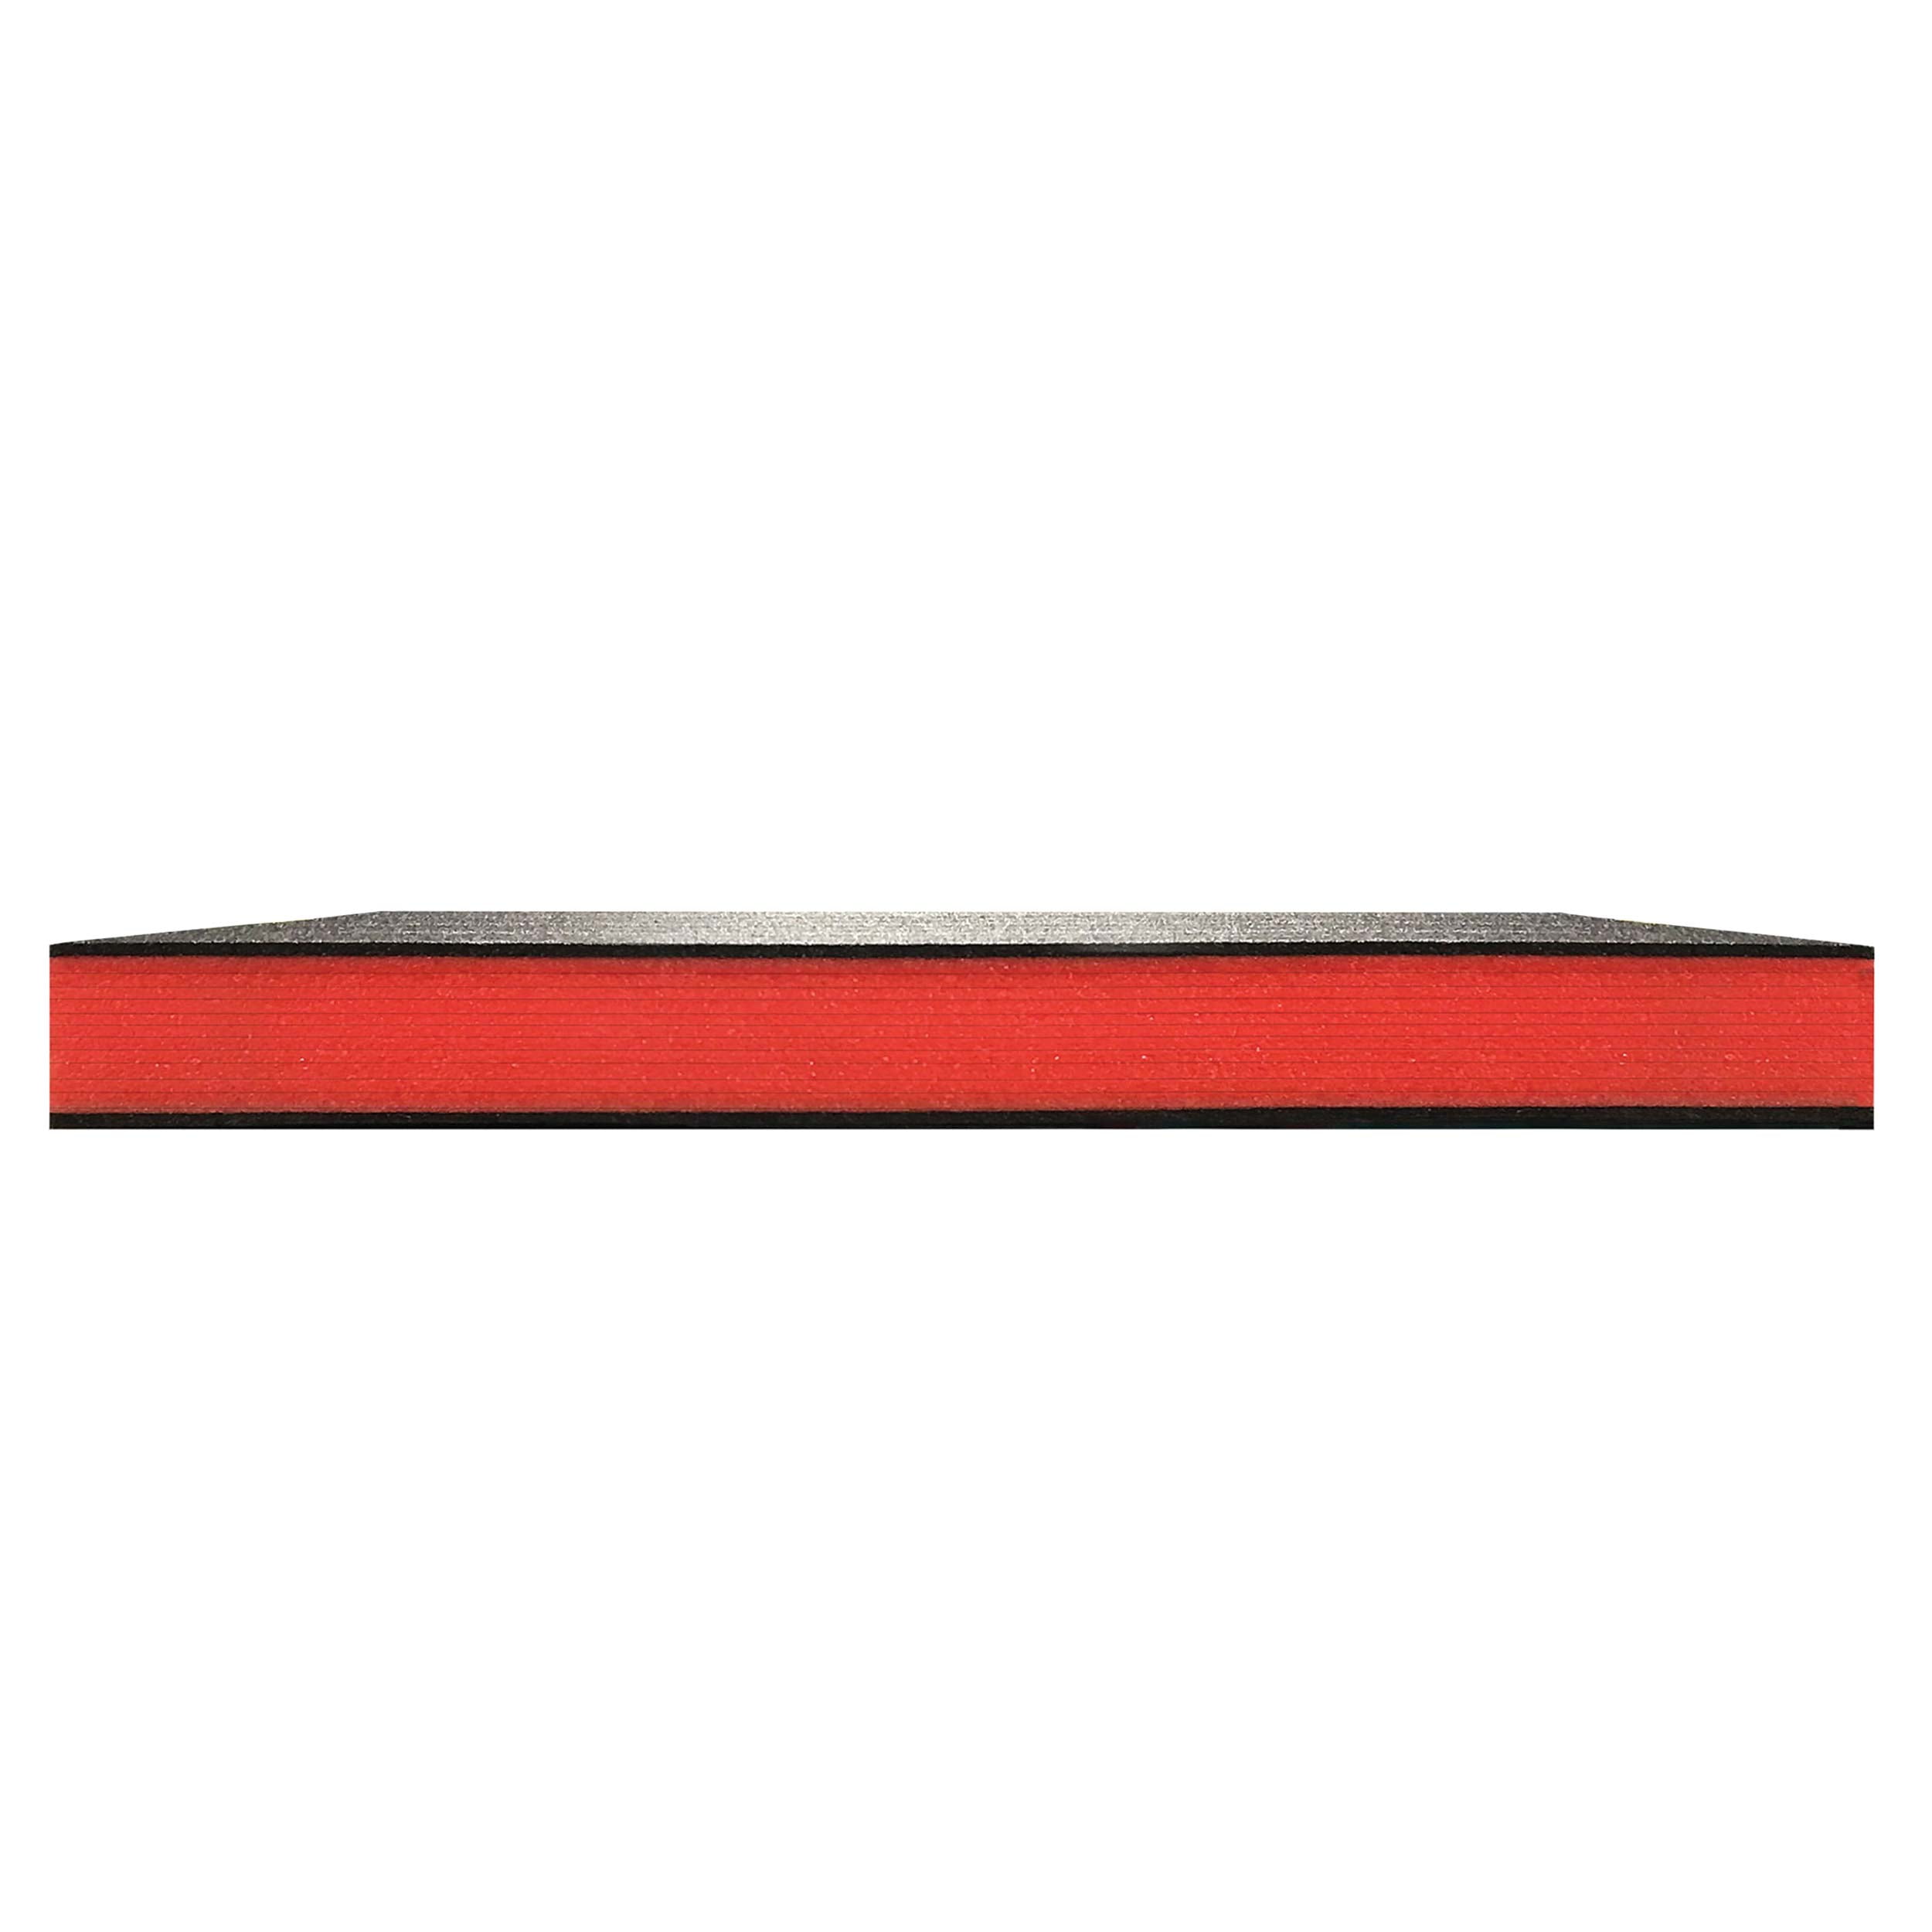 FastCap Kaizen Foam, Red/Black, 24 x 48, 2-1/4 Thick 